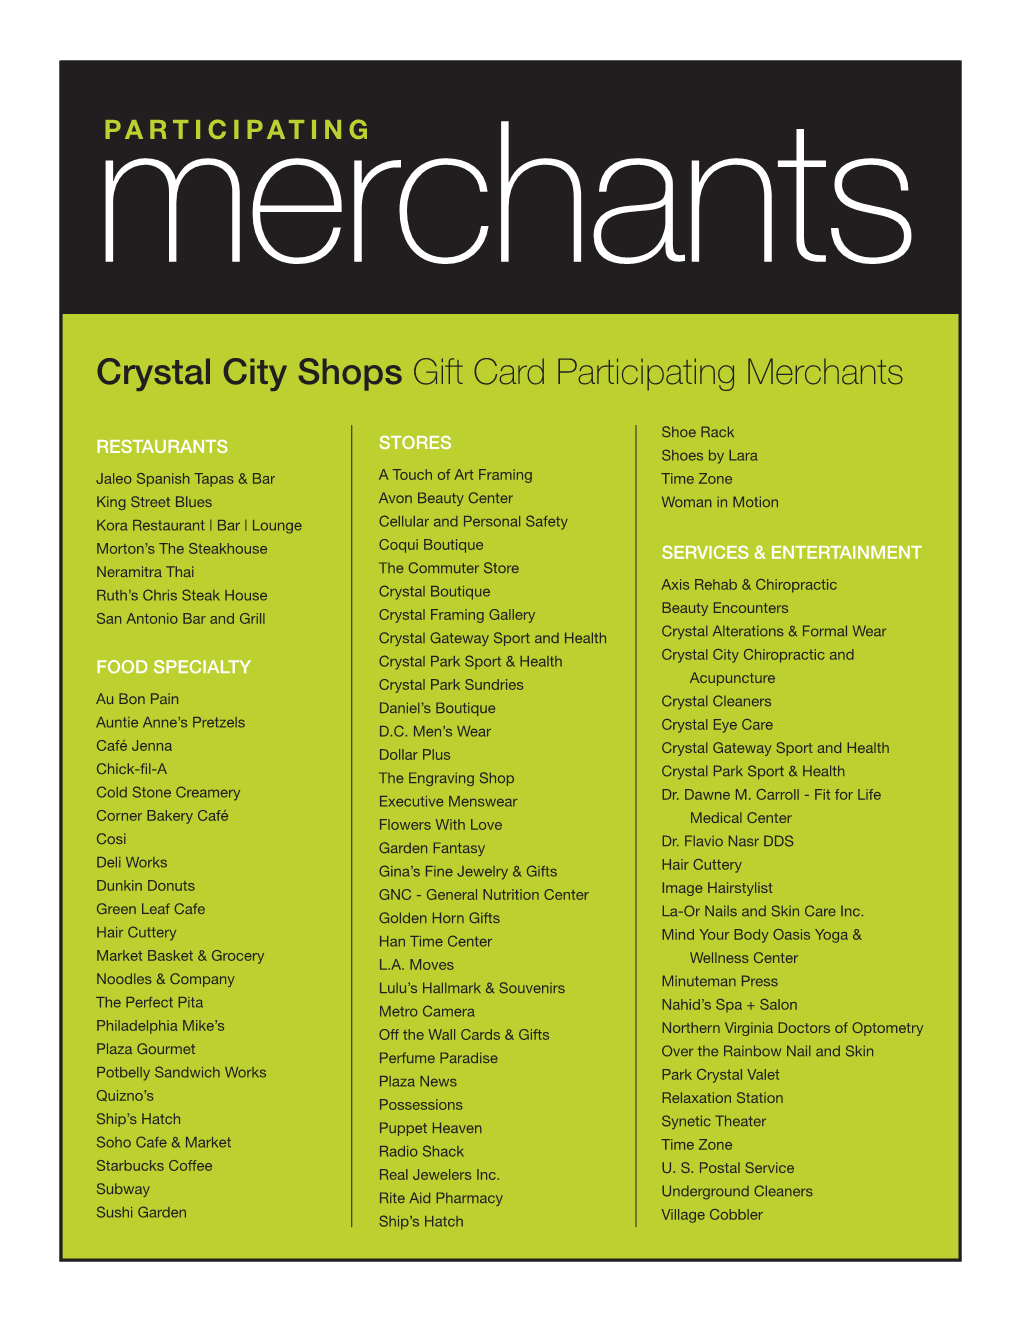 Crystal City Shops Gift Card Participating Merchants